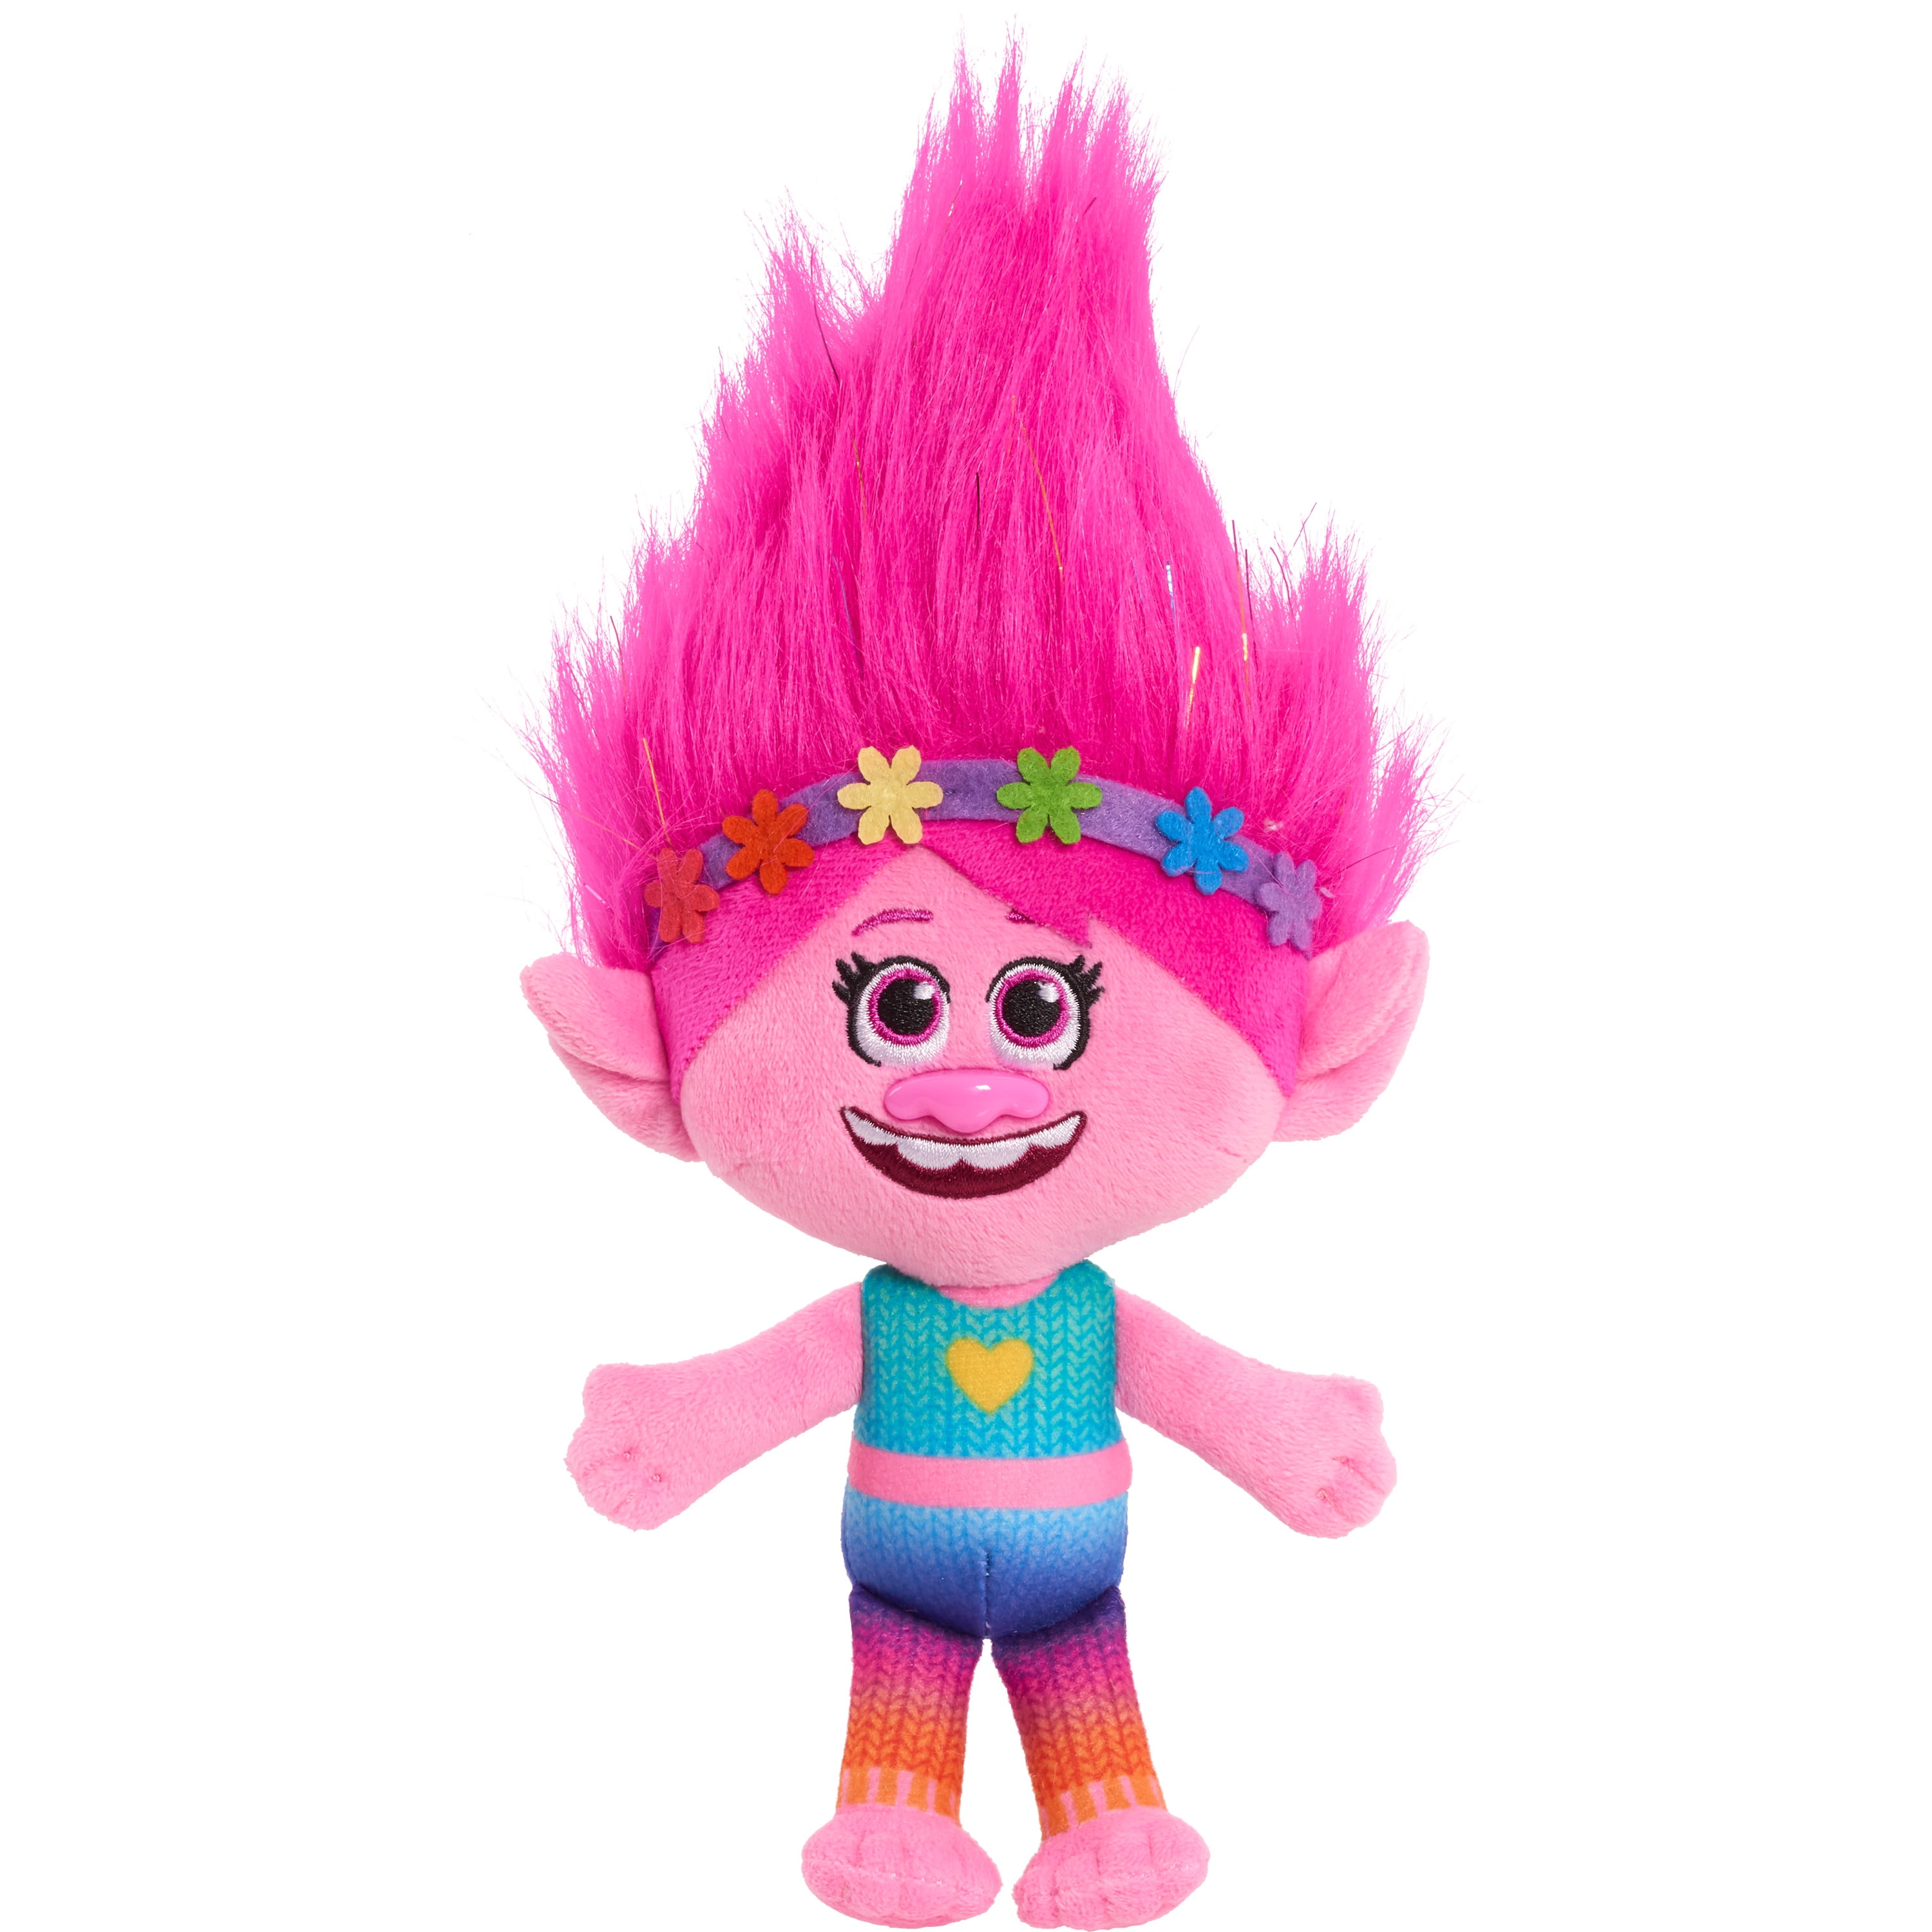 Trolls World Tour Movie Dreamworks Princess Poppy 8” Plush Doll Toy LT ED NEW 